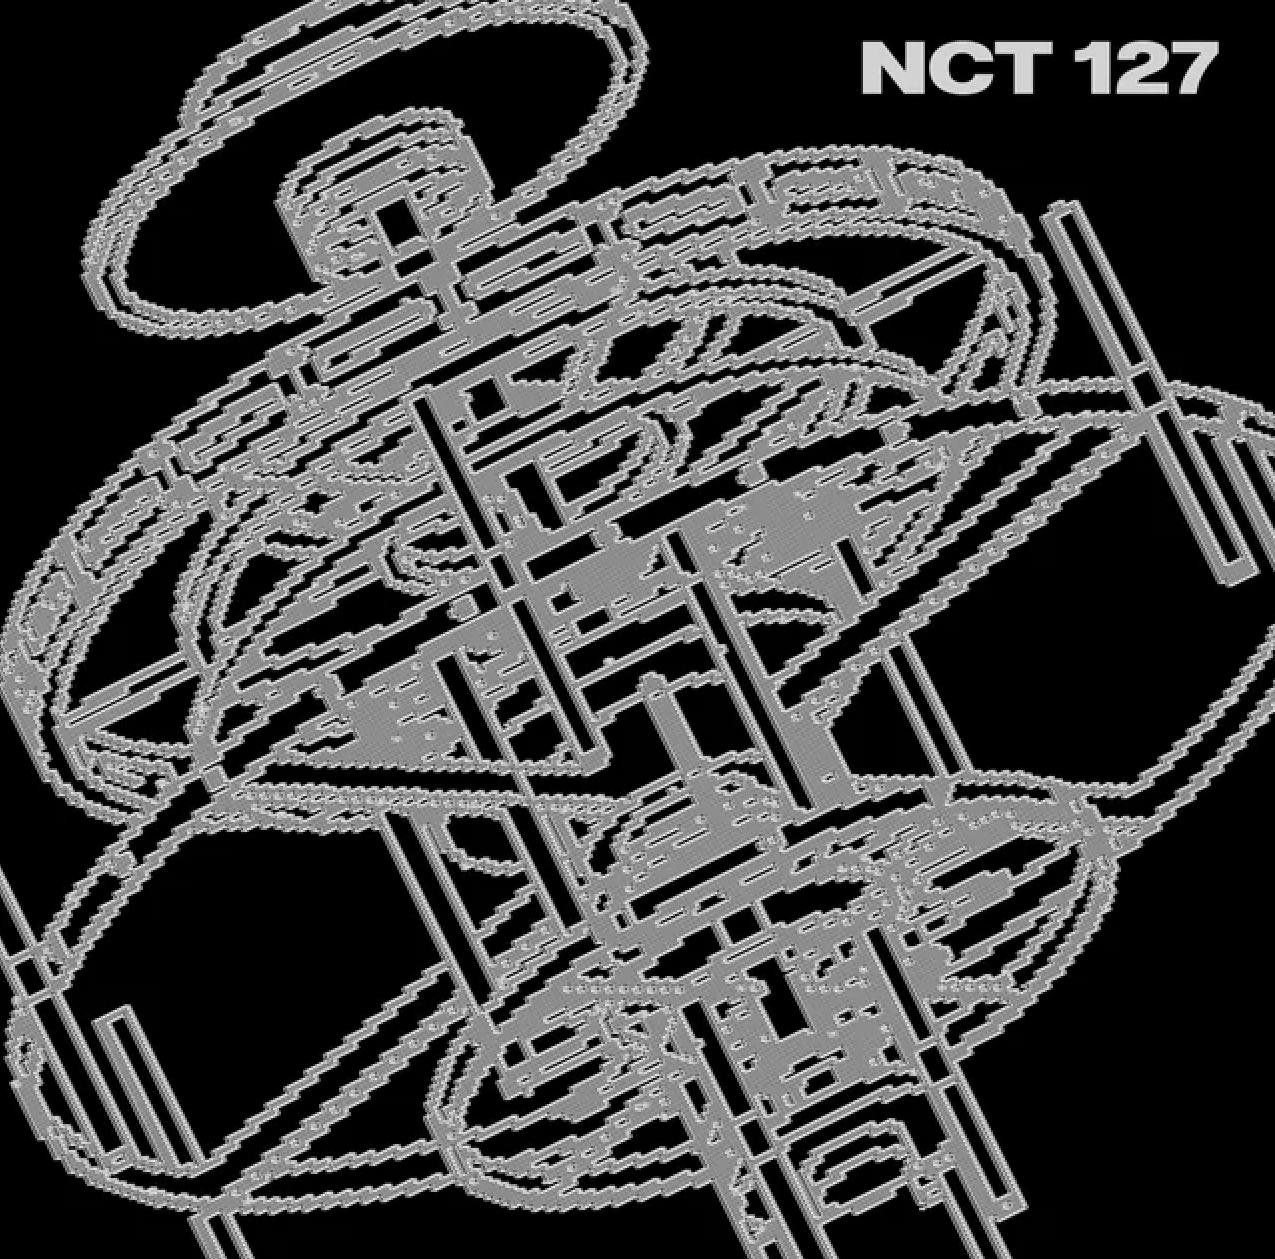 NCT 127 Fact Check cover artwork